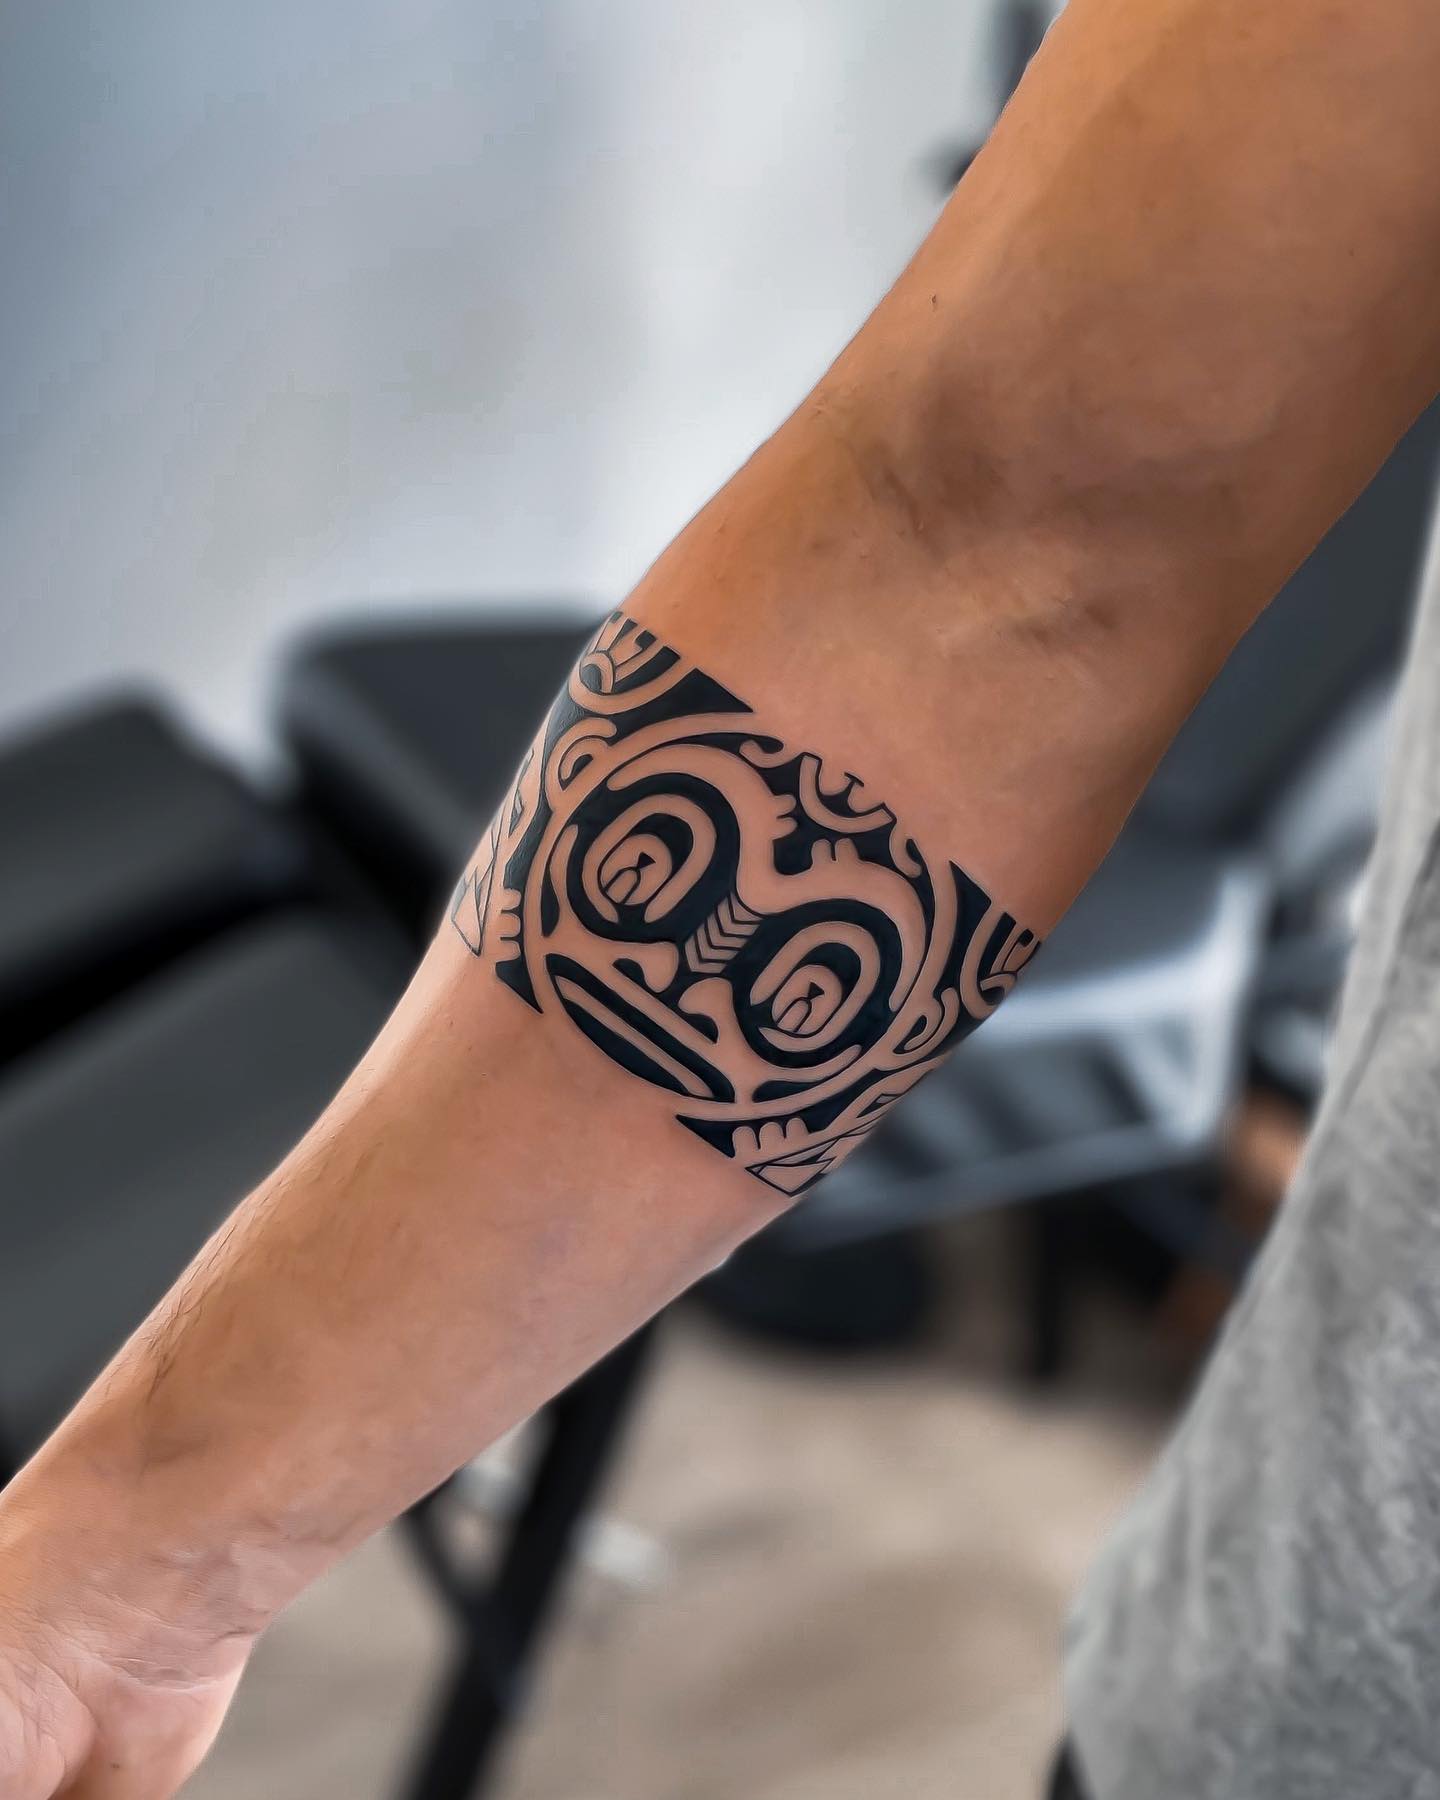 Tatuaje maorí alrededor del brazo